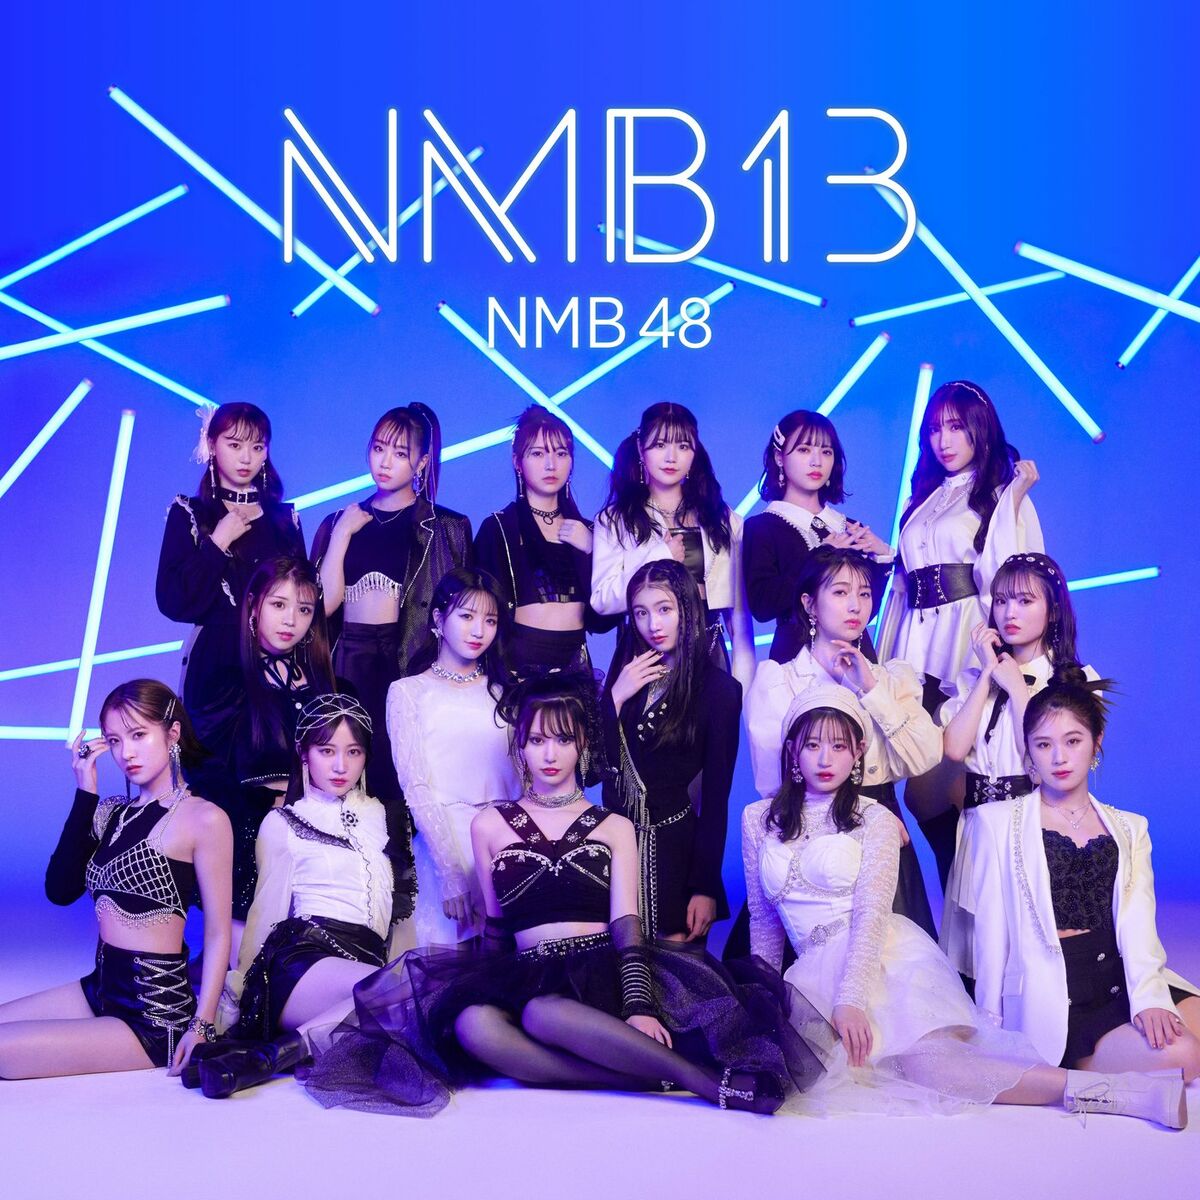 NMB48: albums, songs, playlists | Listen on Deezer